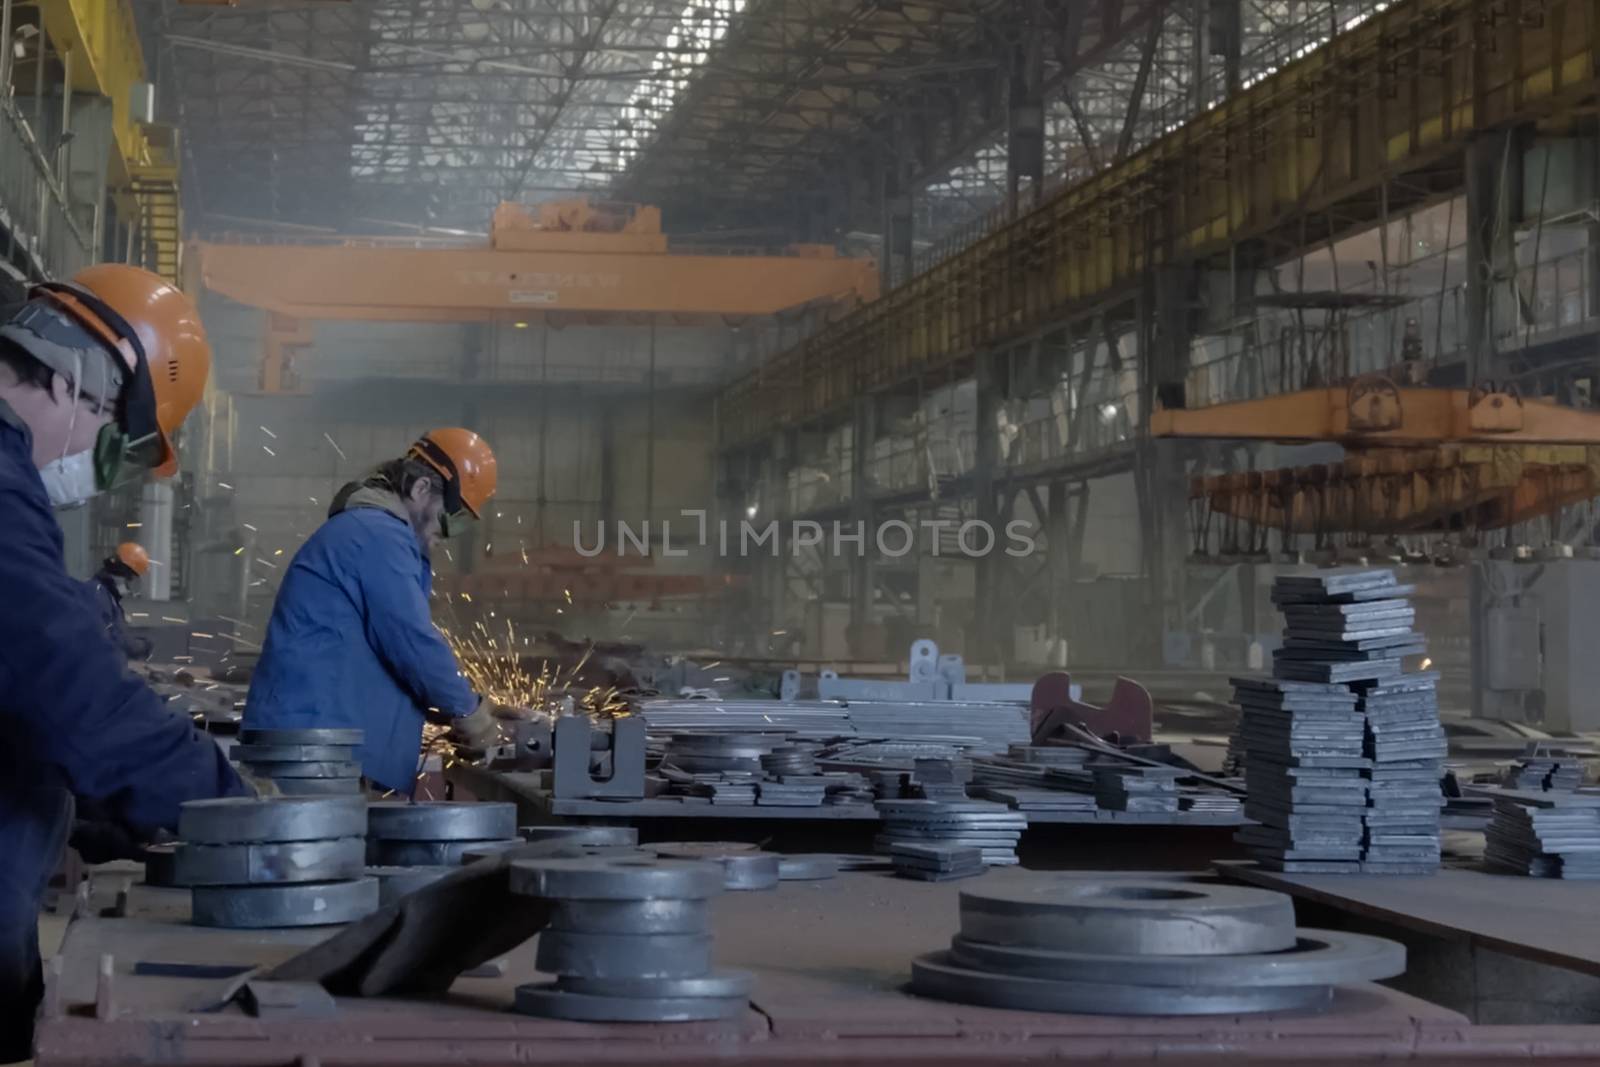 Novorossiysk, Russia - May 26, 2018: Shipbuilding plant, Internal welding workshop m erection of metal structures. The plant in Novorossiysk.